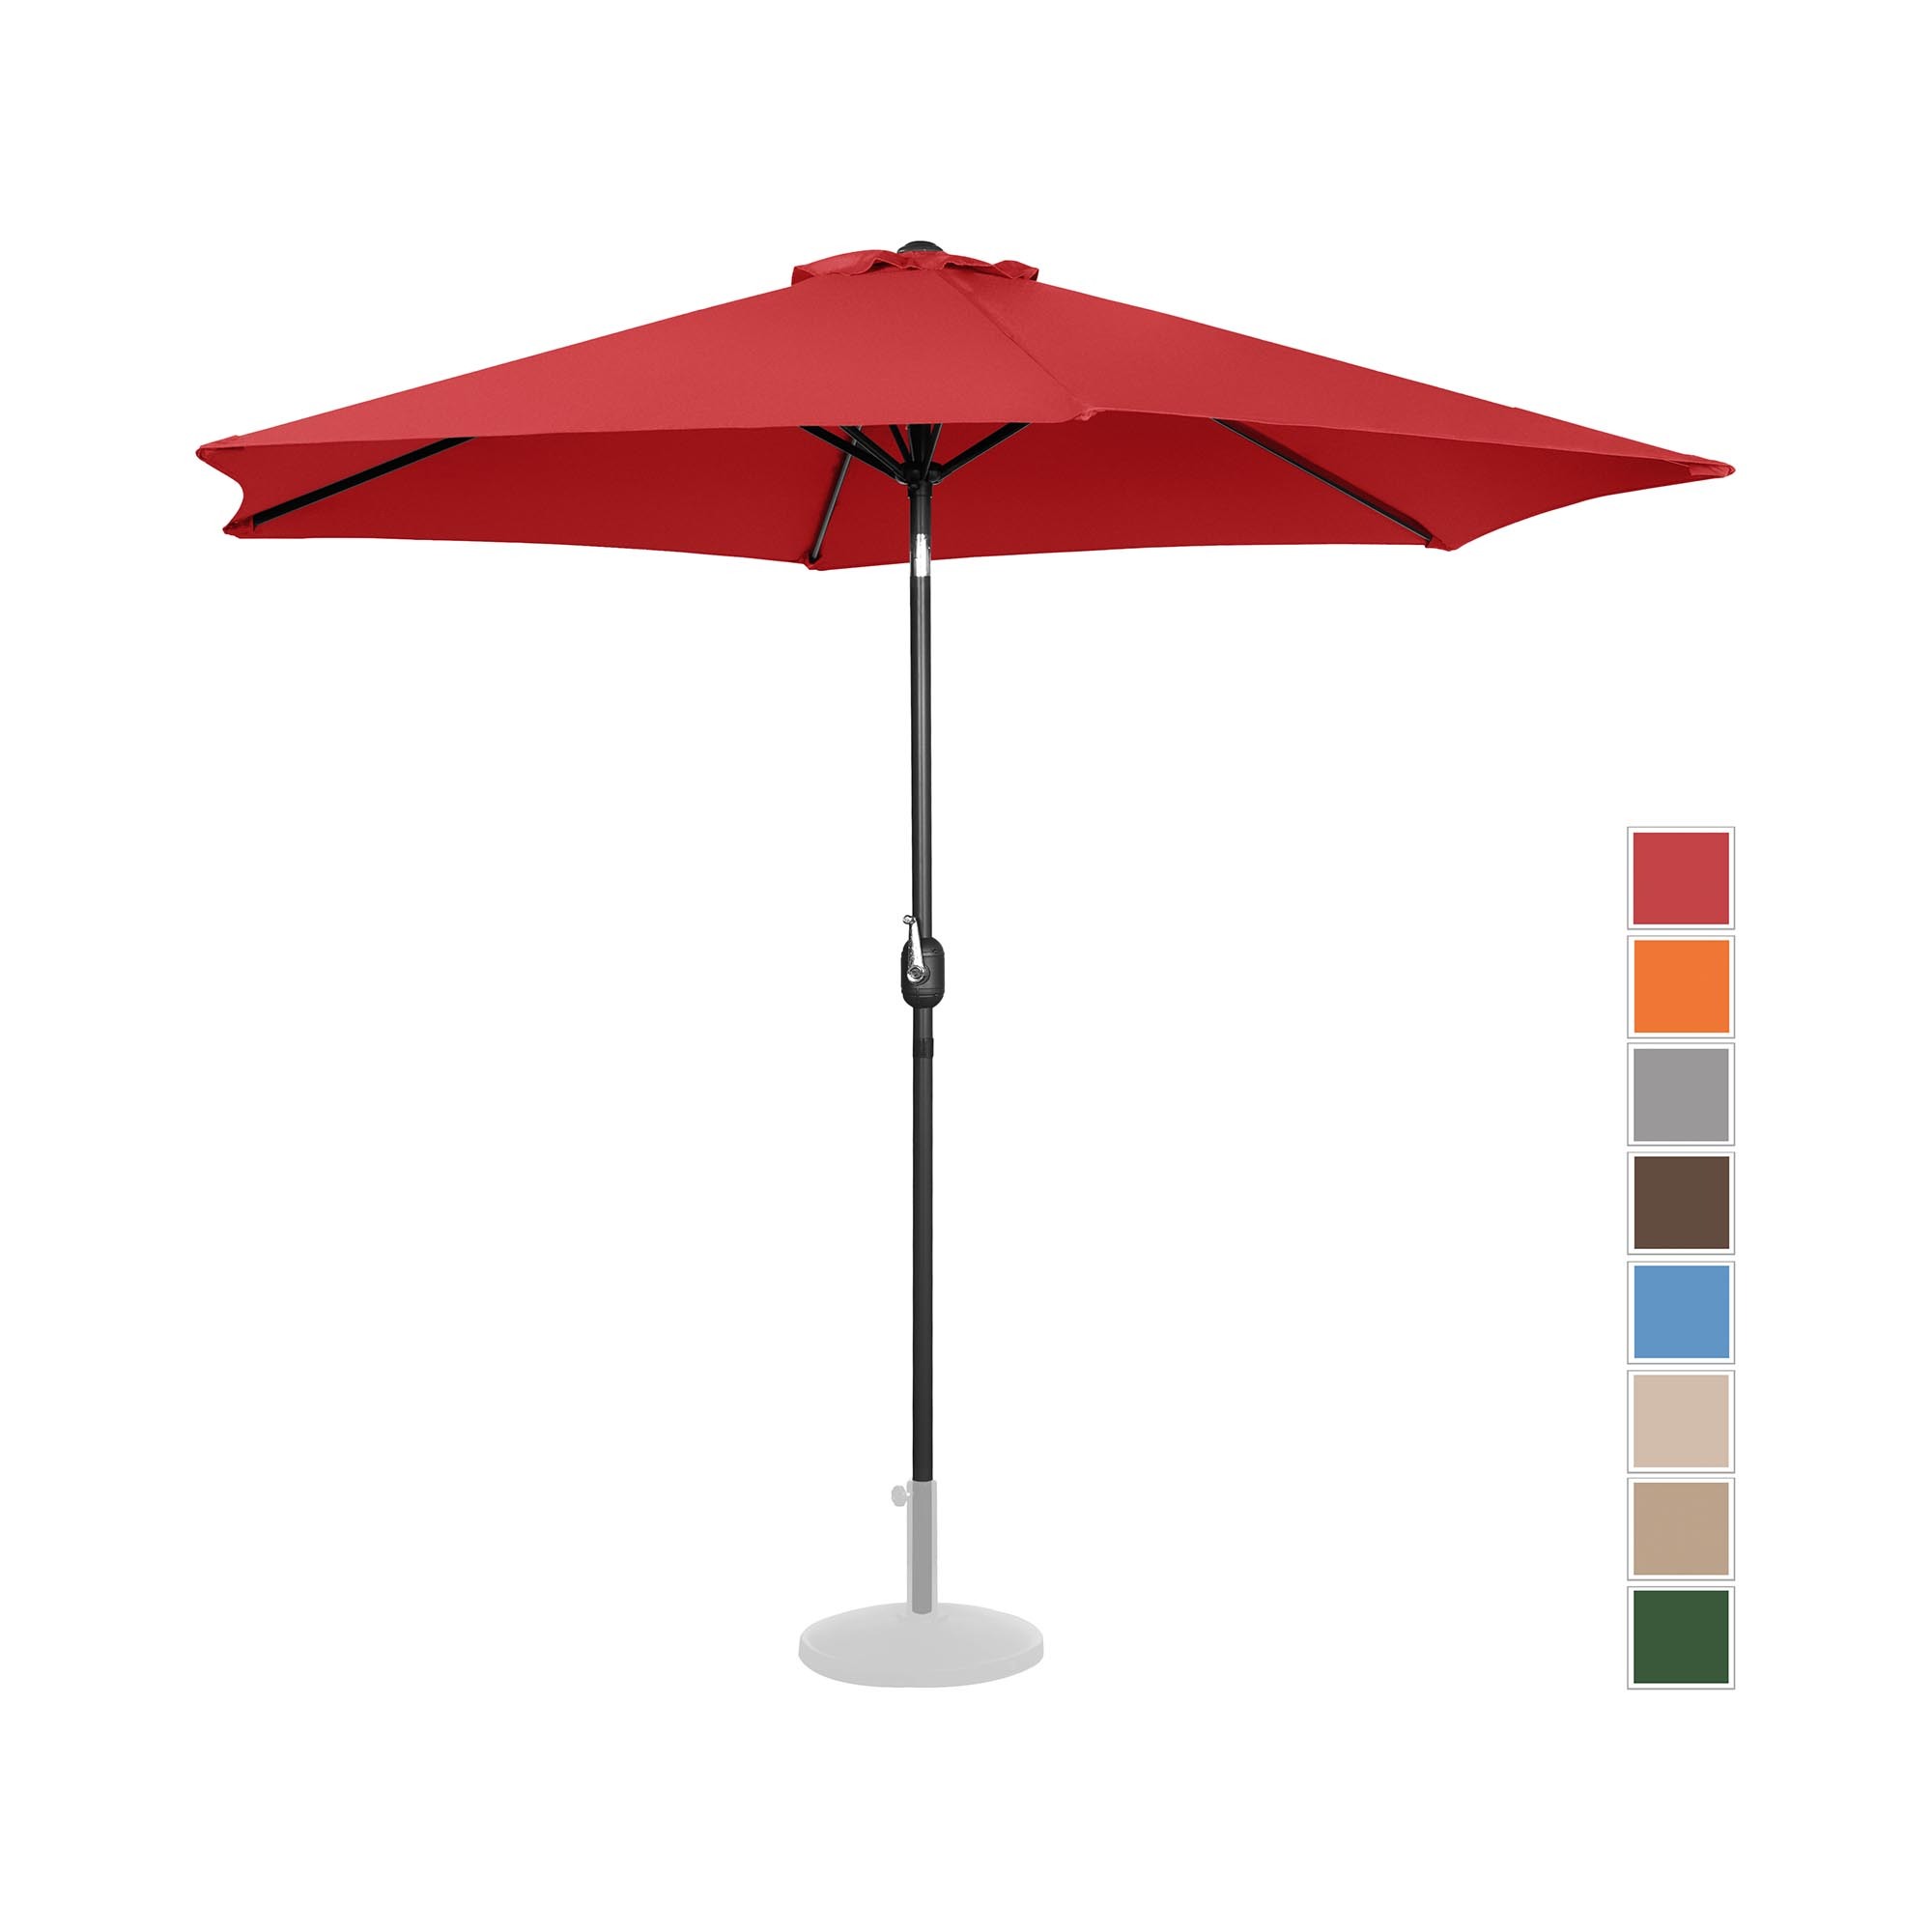 Uniprodo Grote parasol - rood - zeshoekig - Ø 300 cm - kantelbaar